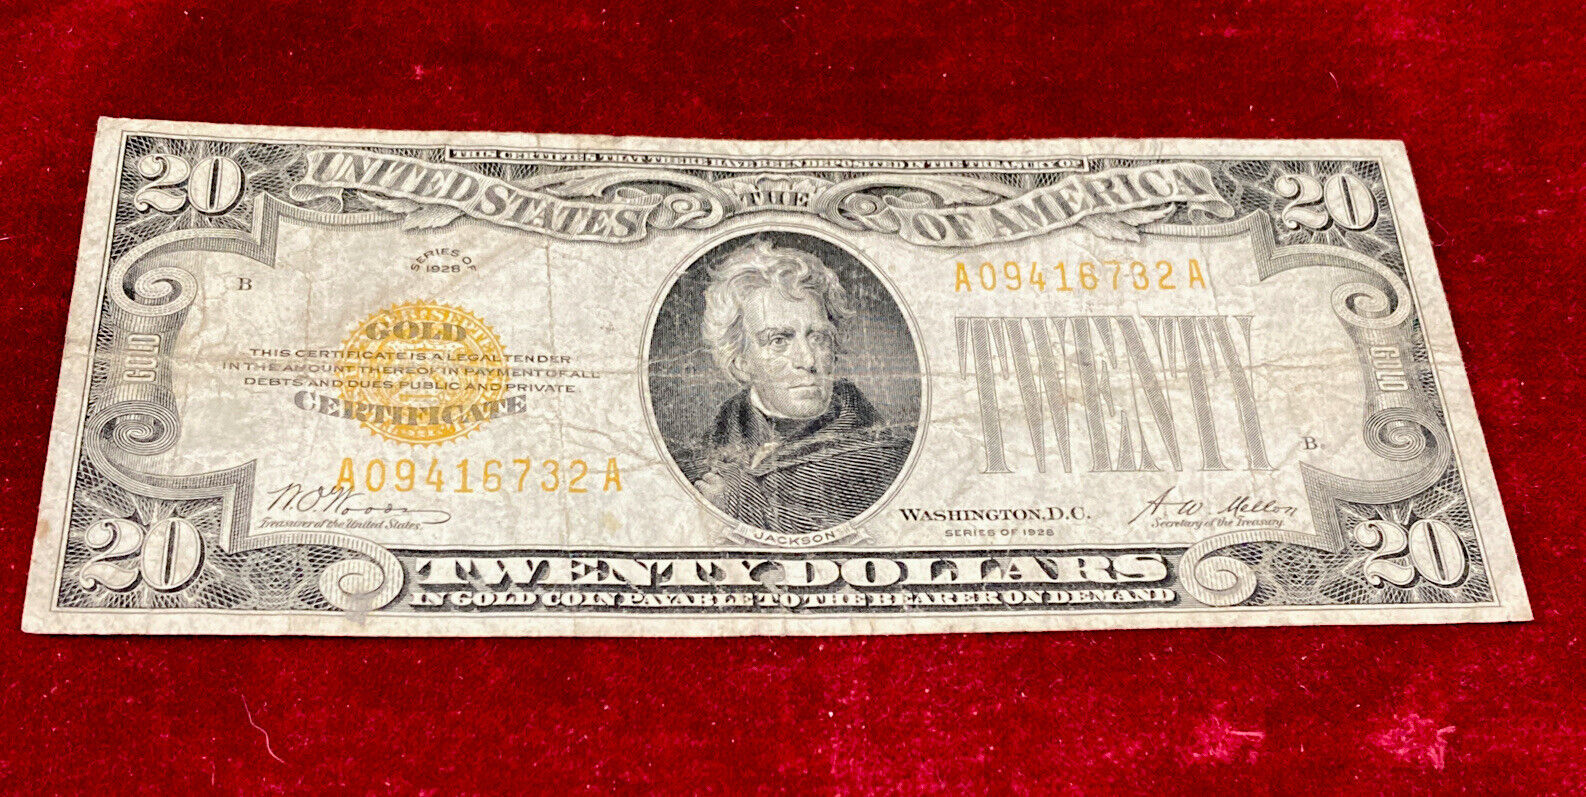 Series 1928 $20 Gold Certificate